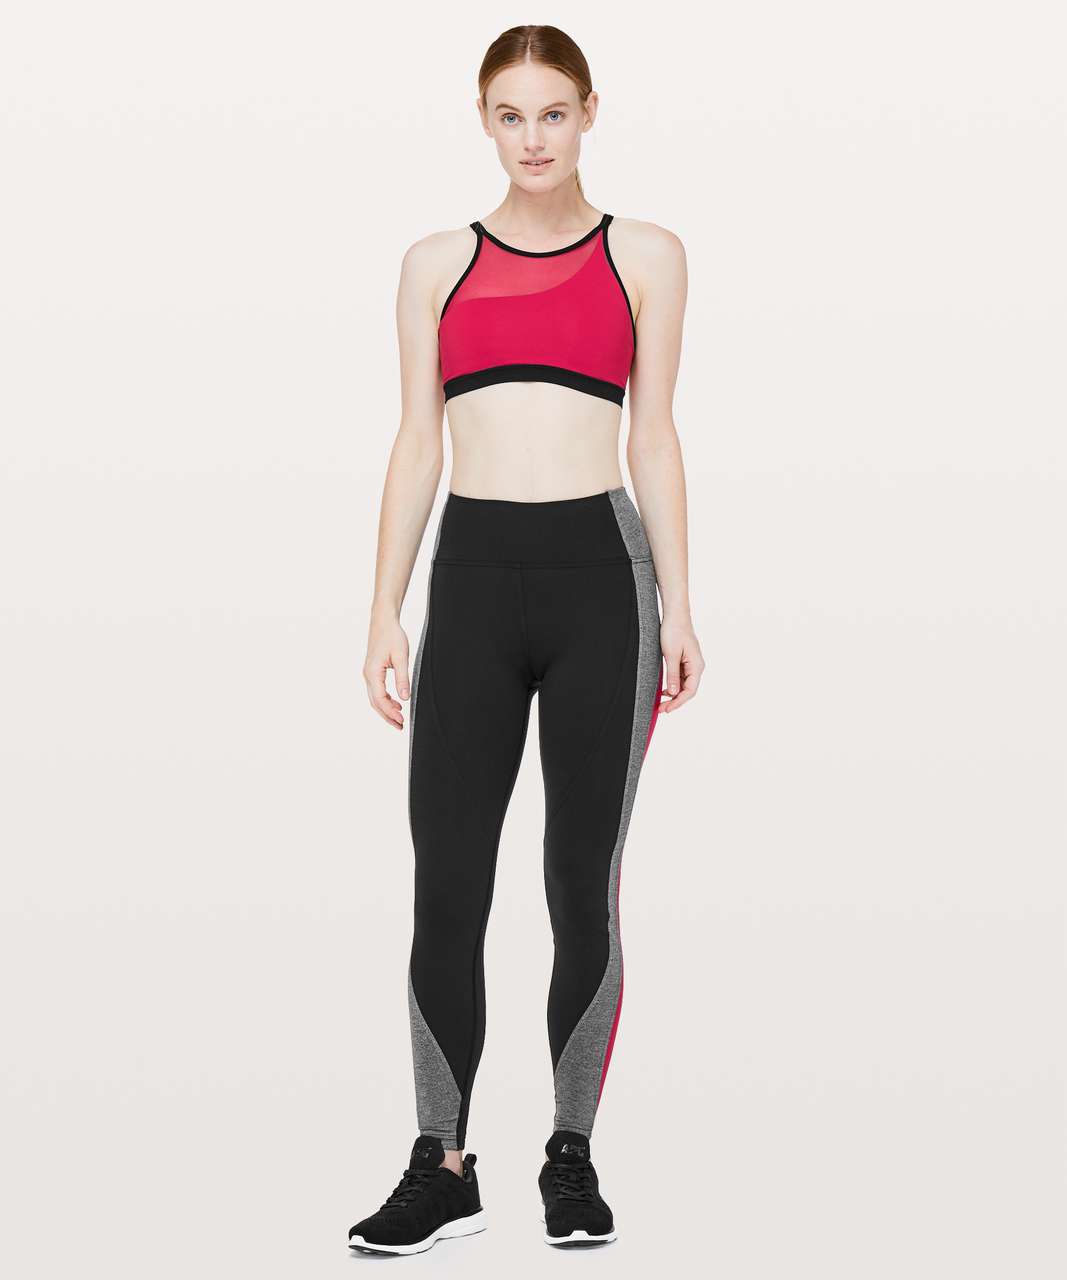 Lululemon Get Going Train Tight workout legging size 6 Black red Gray  running